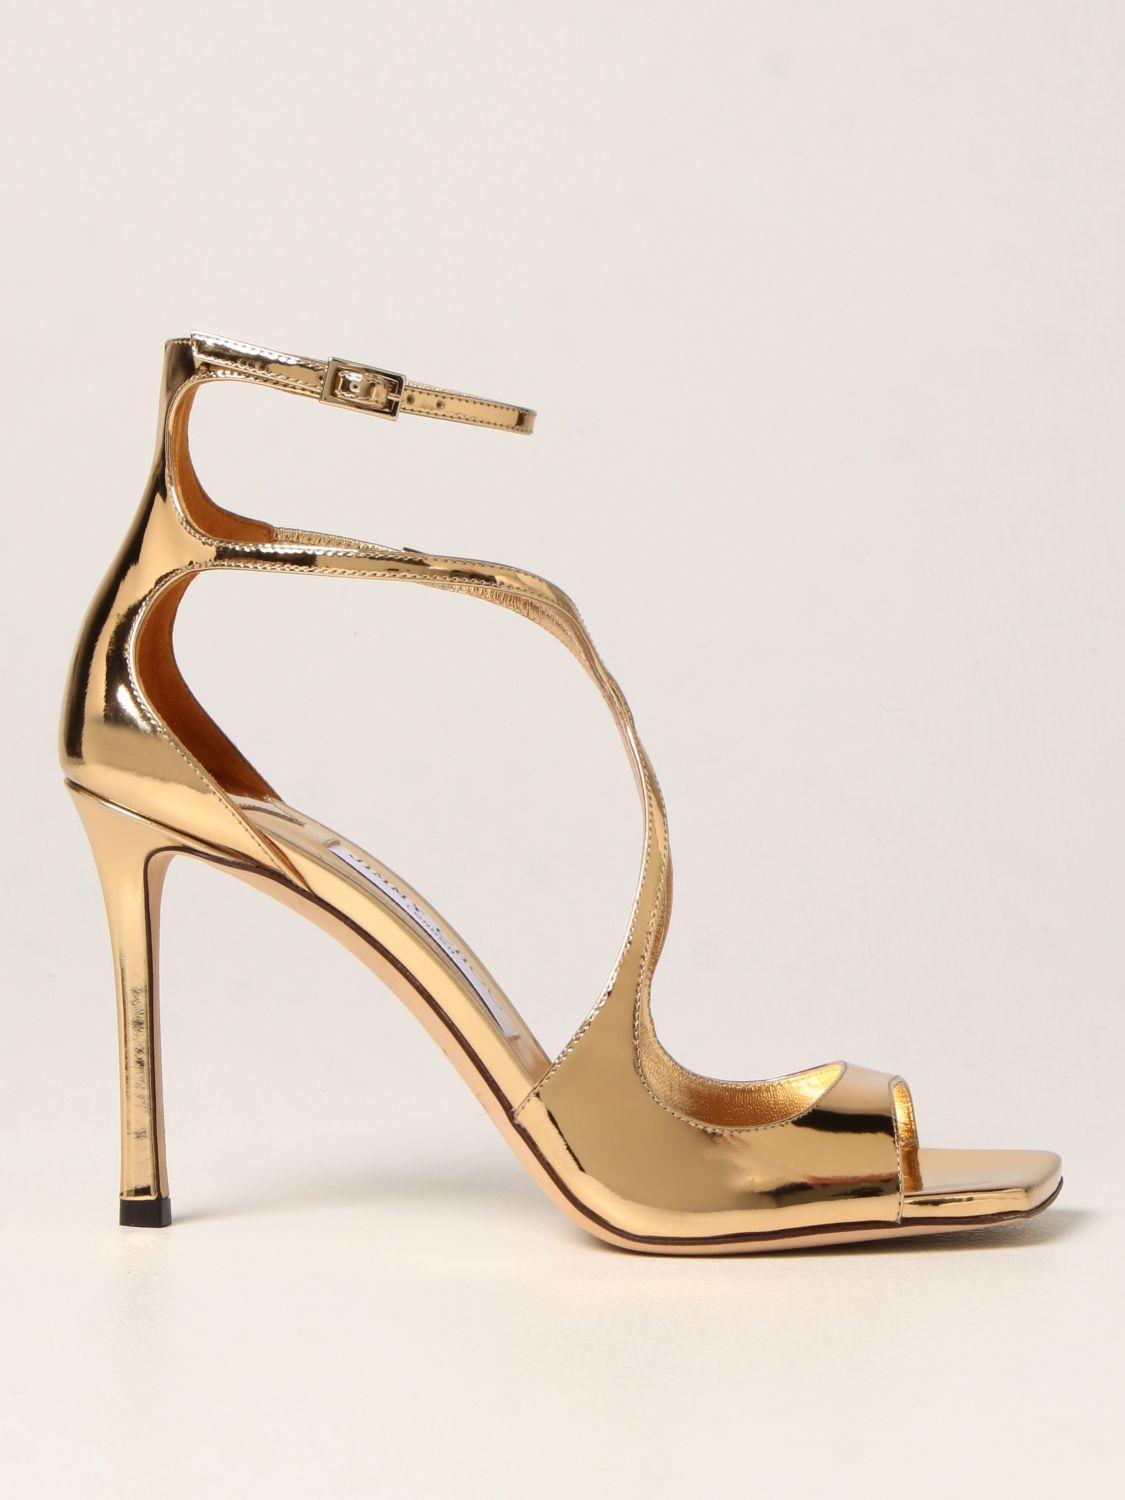 JIMMY CHOO: Azia laminated leather sandals - Gold | Jimmy Choo heeled ...